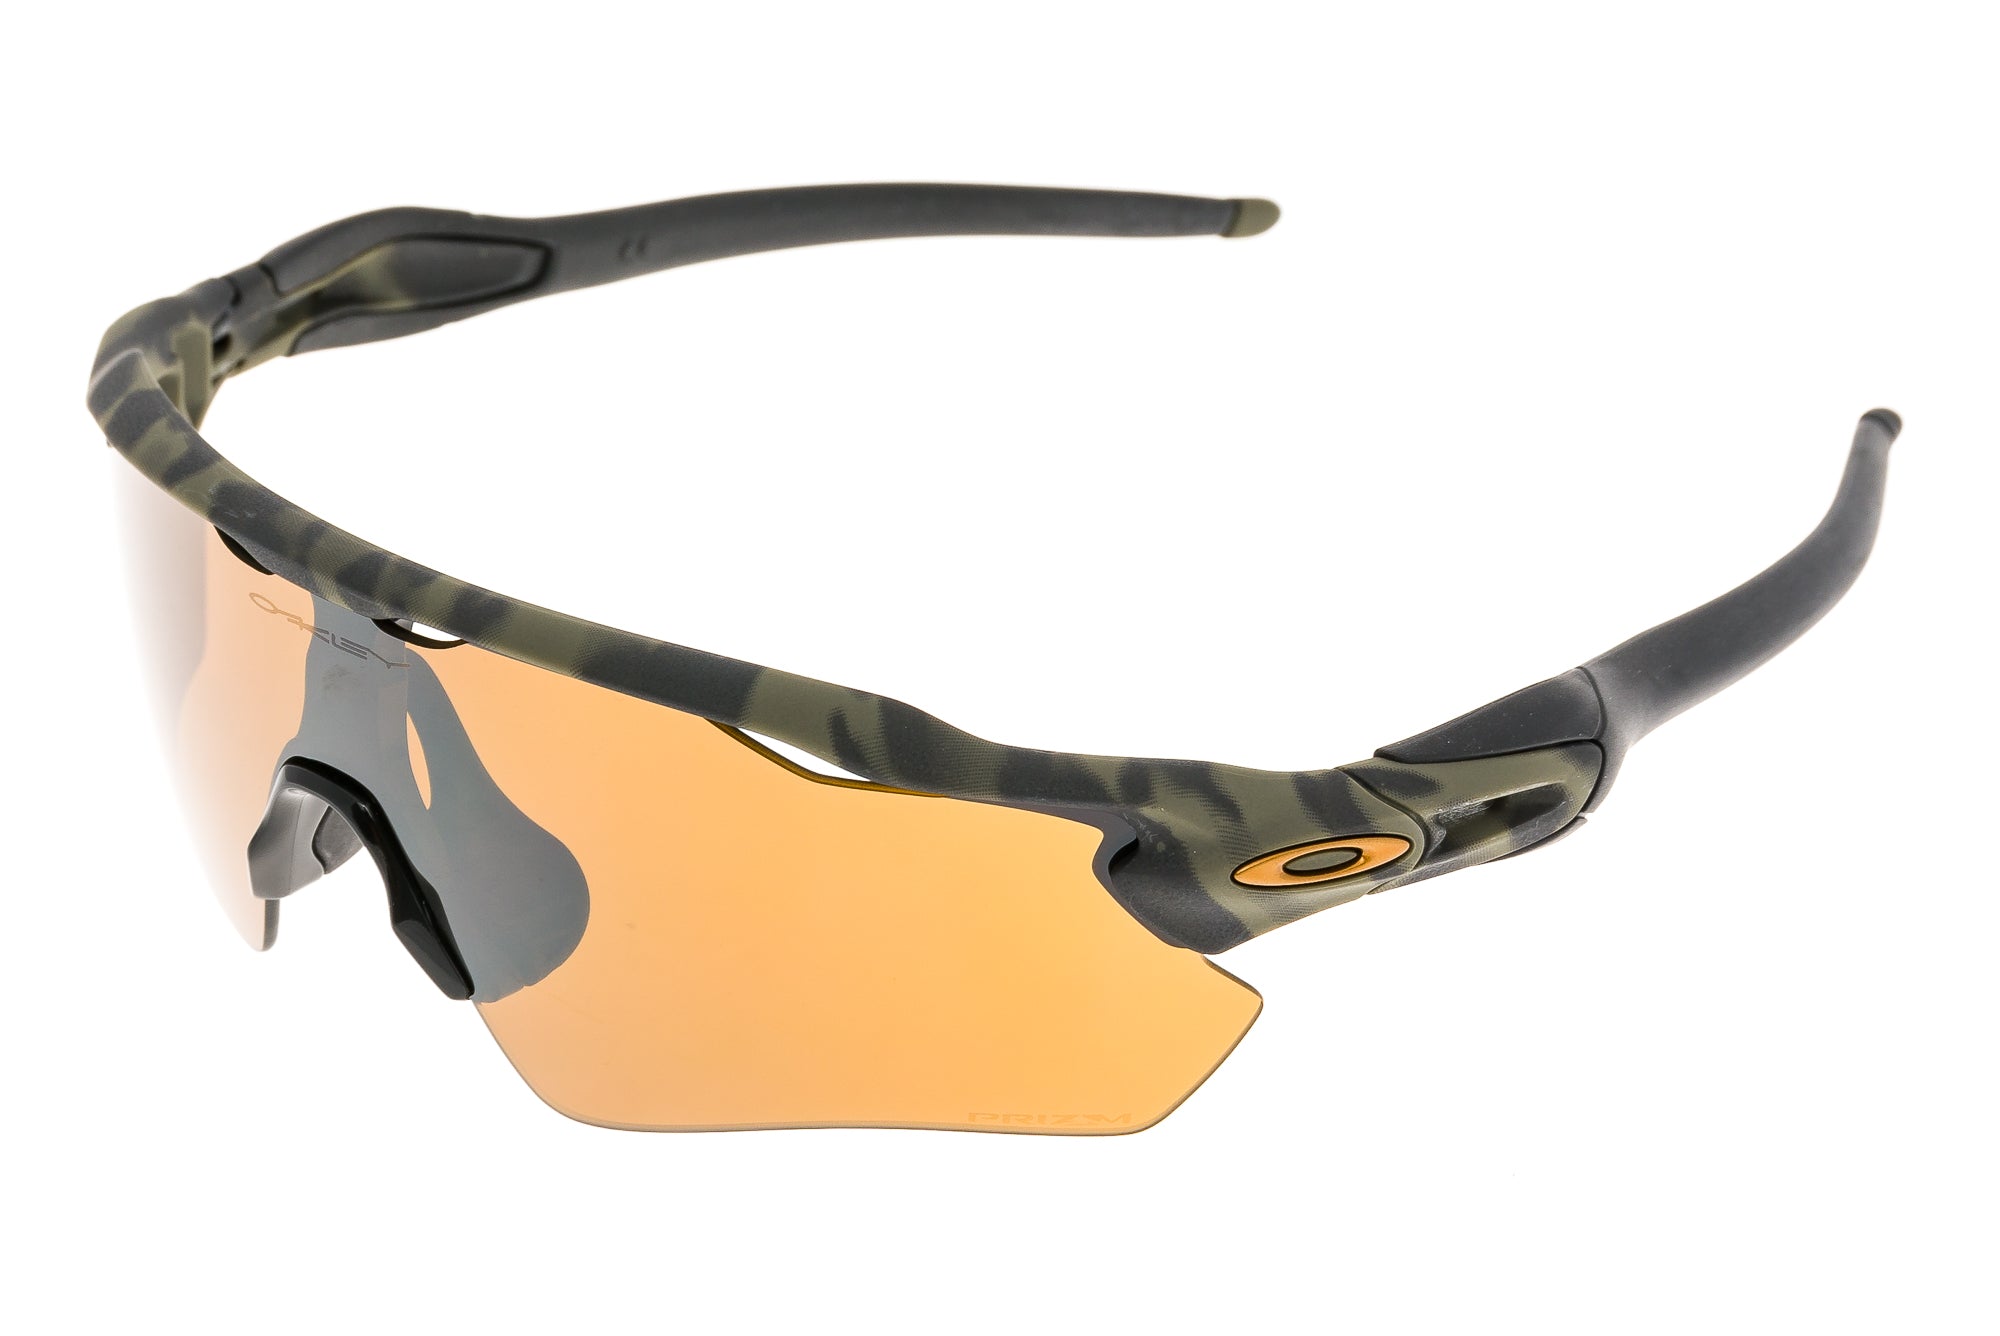 Oakley Radar EV Path Sunglasses Olive Camo Frame | The Pro's Closet